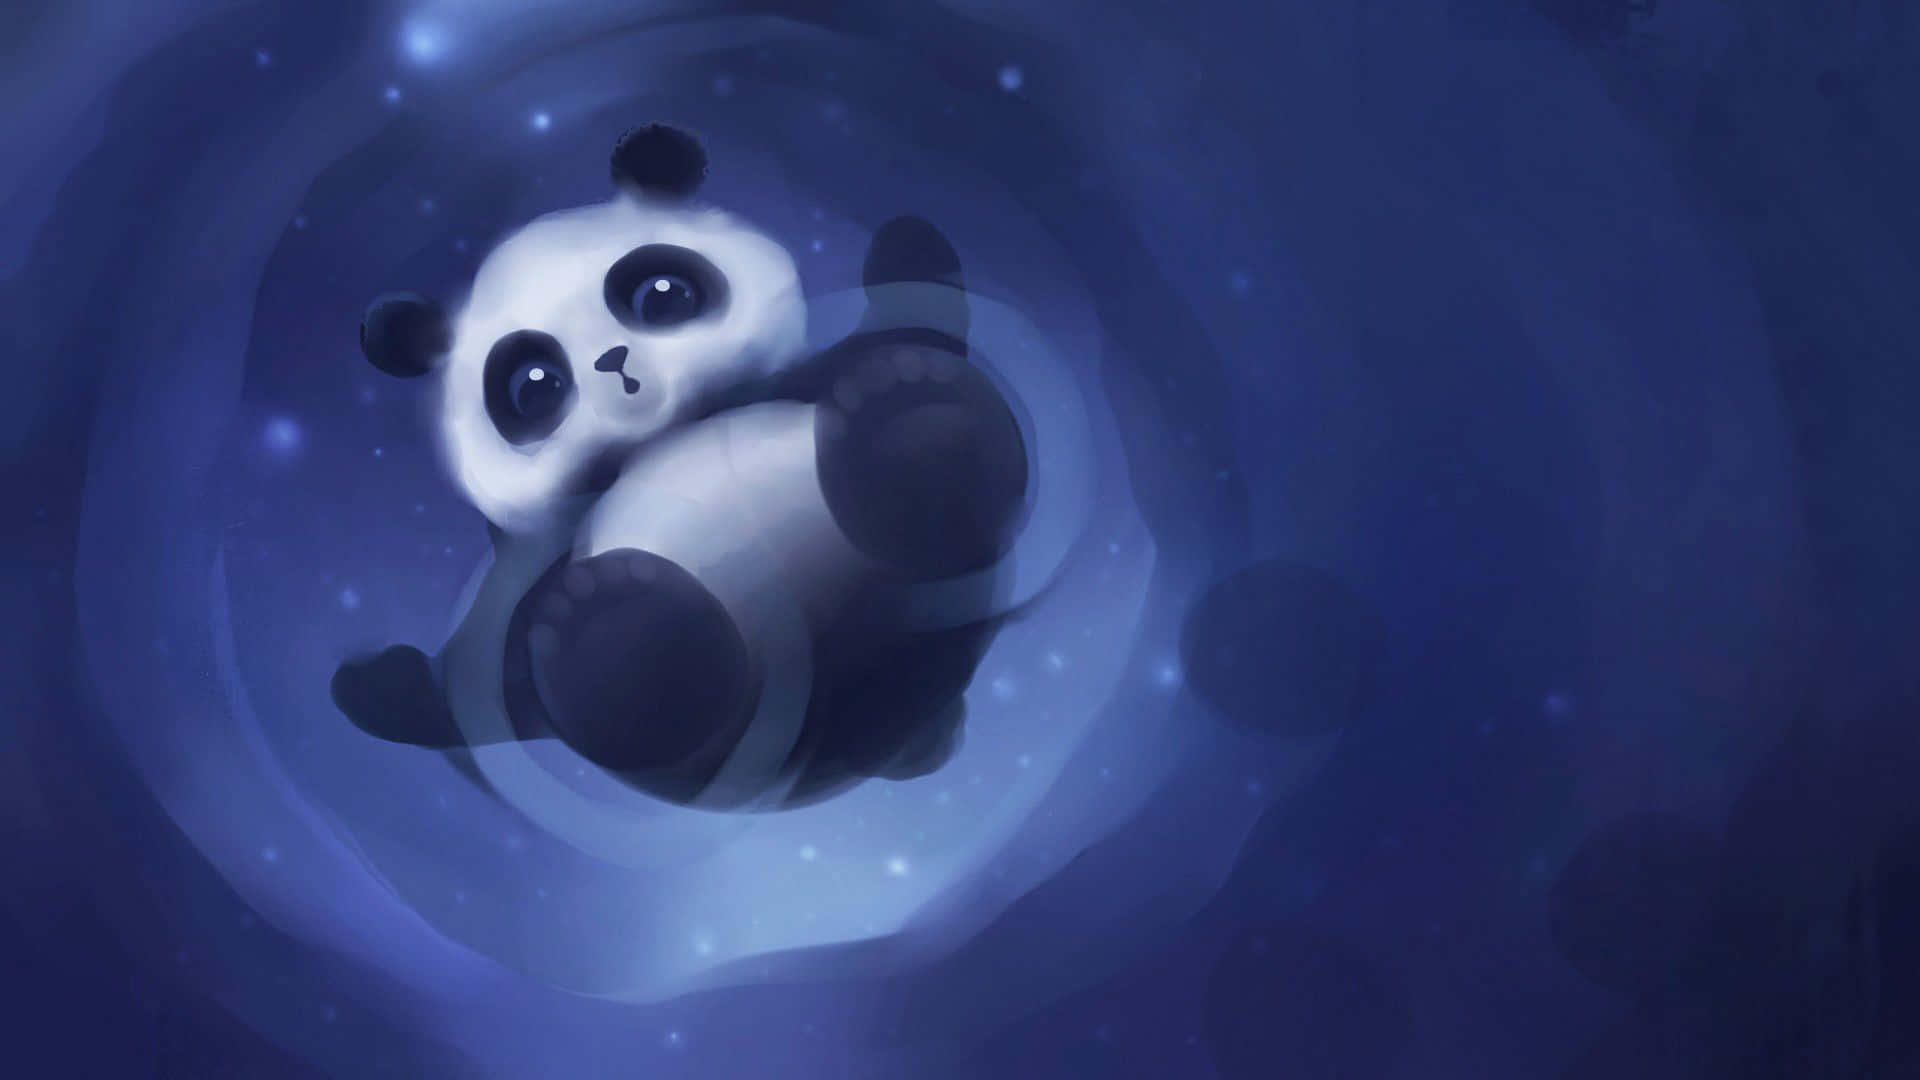 Keepin' It Kawaii with This Adorable Panda Wallpaper